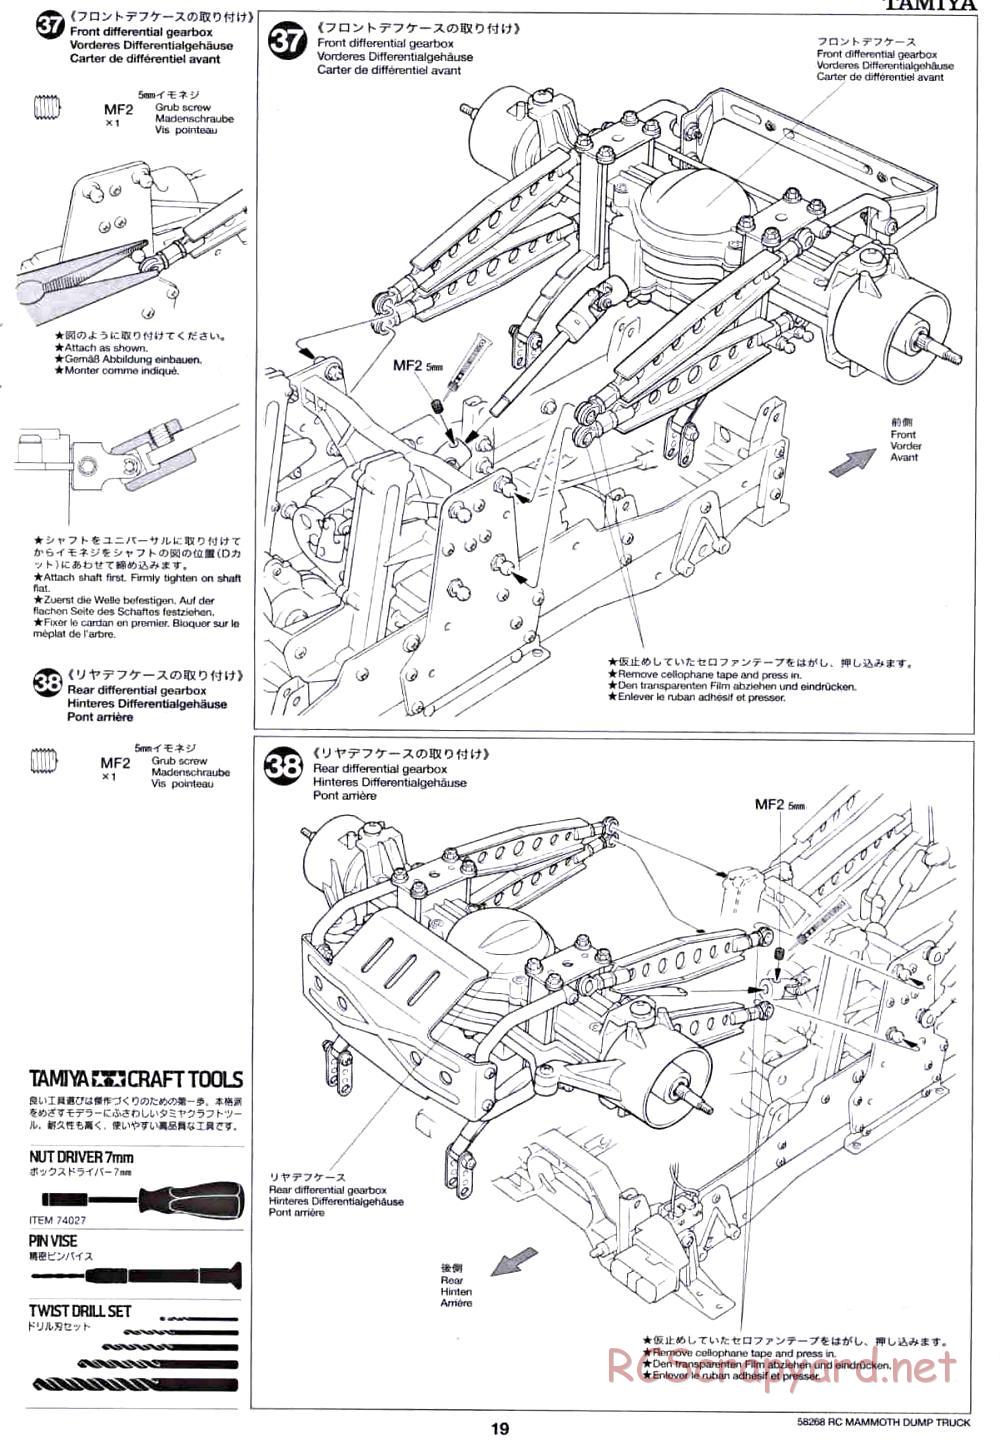 Tamiya - Mammoth Dump Truck Chassis - Manual - Page 19